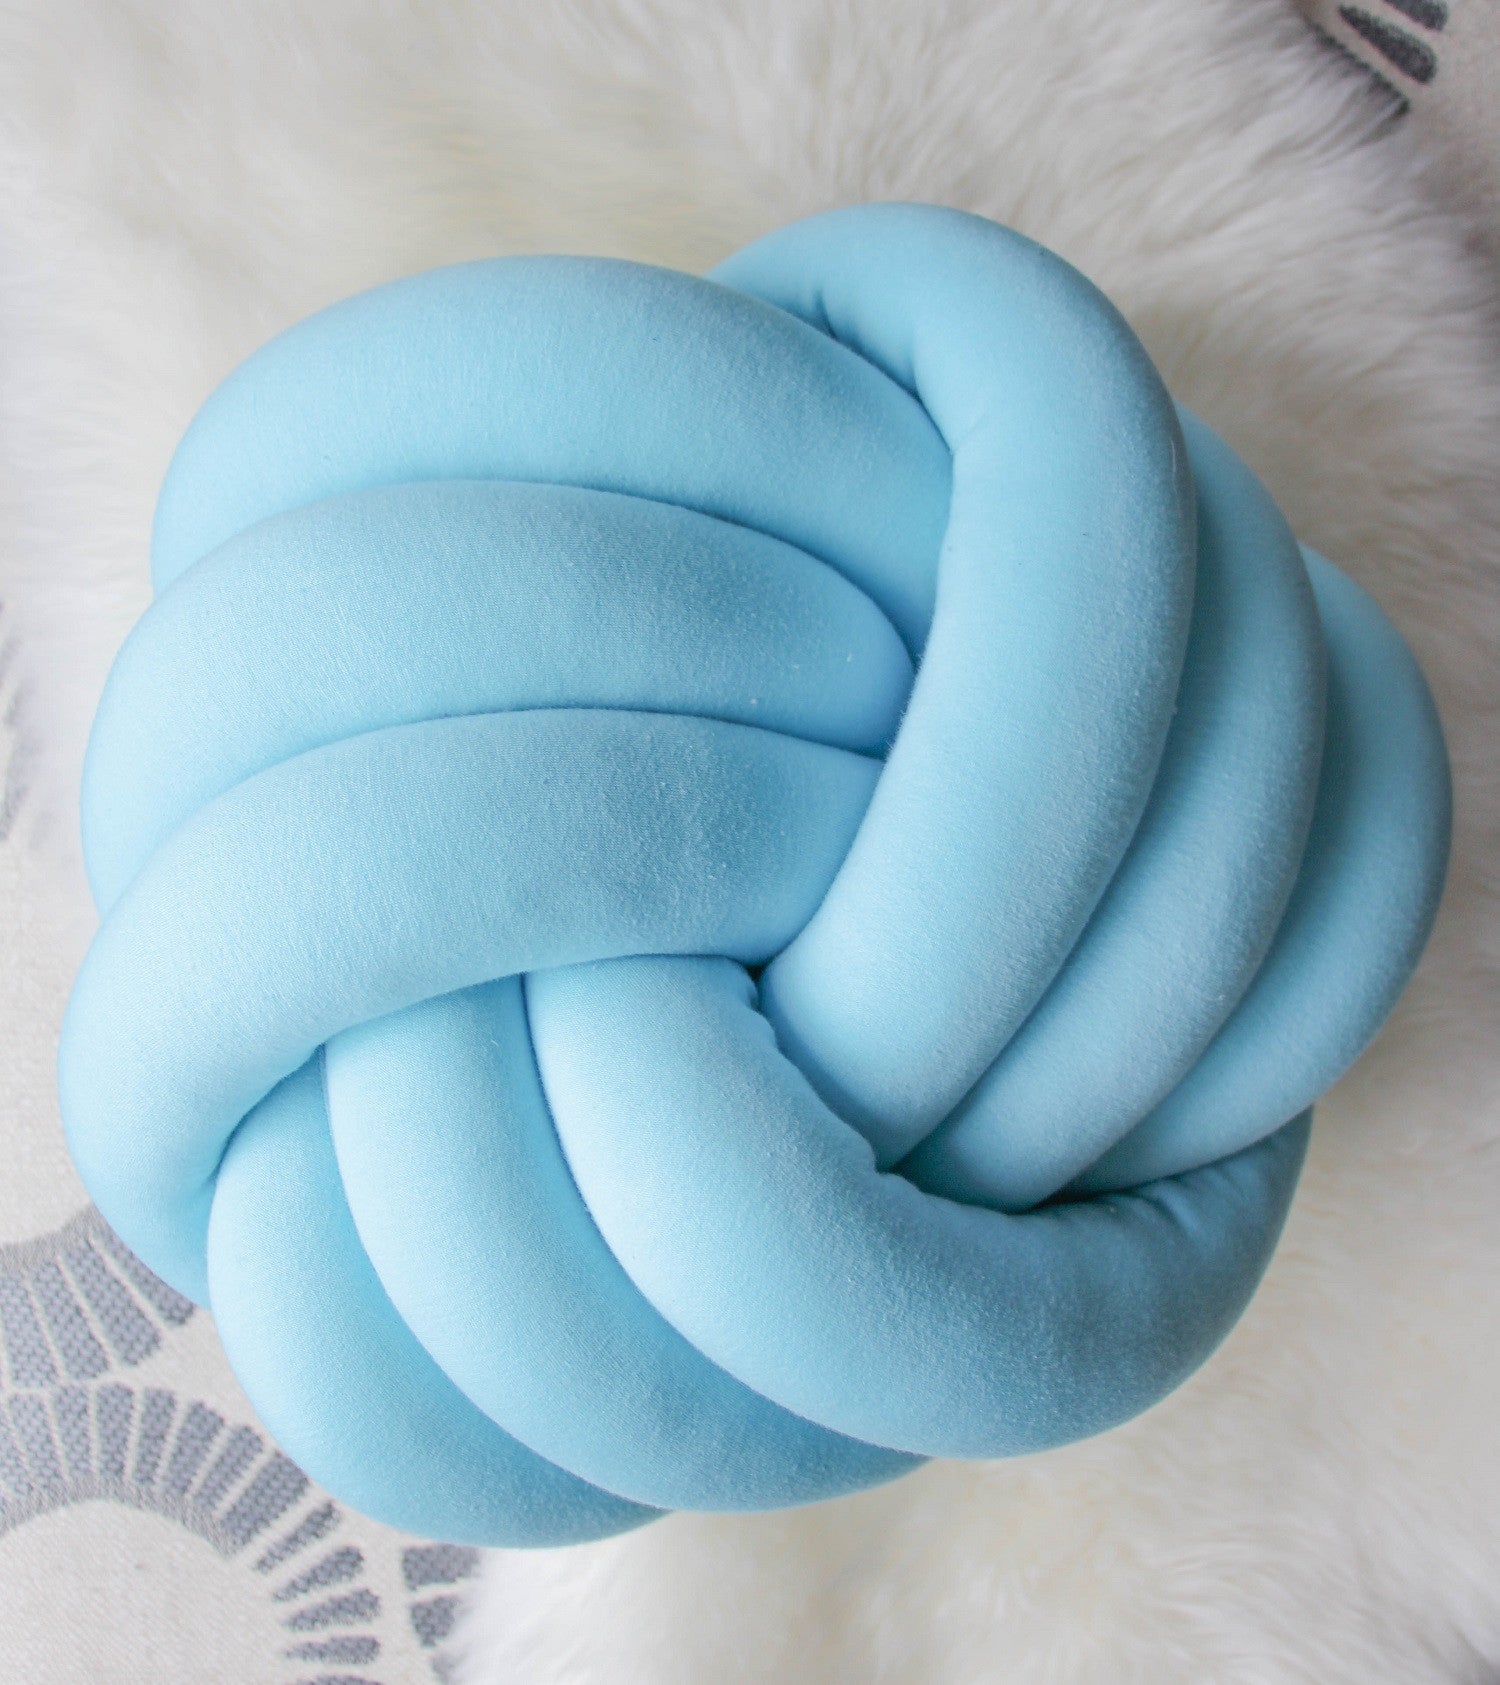 Swirl Knot Pillow - See more Knot Pillows & Cushions at JujuAndJake.com